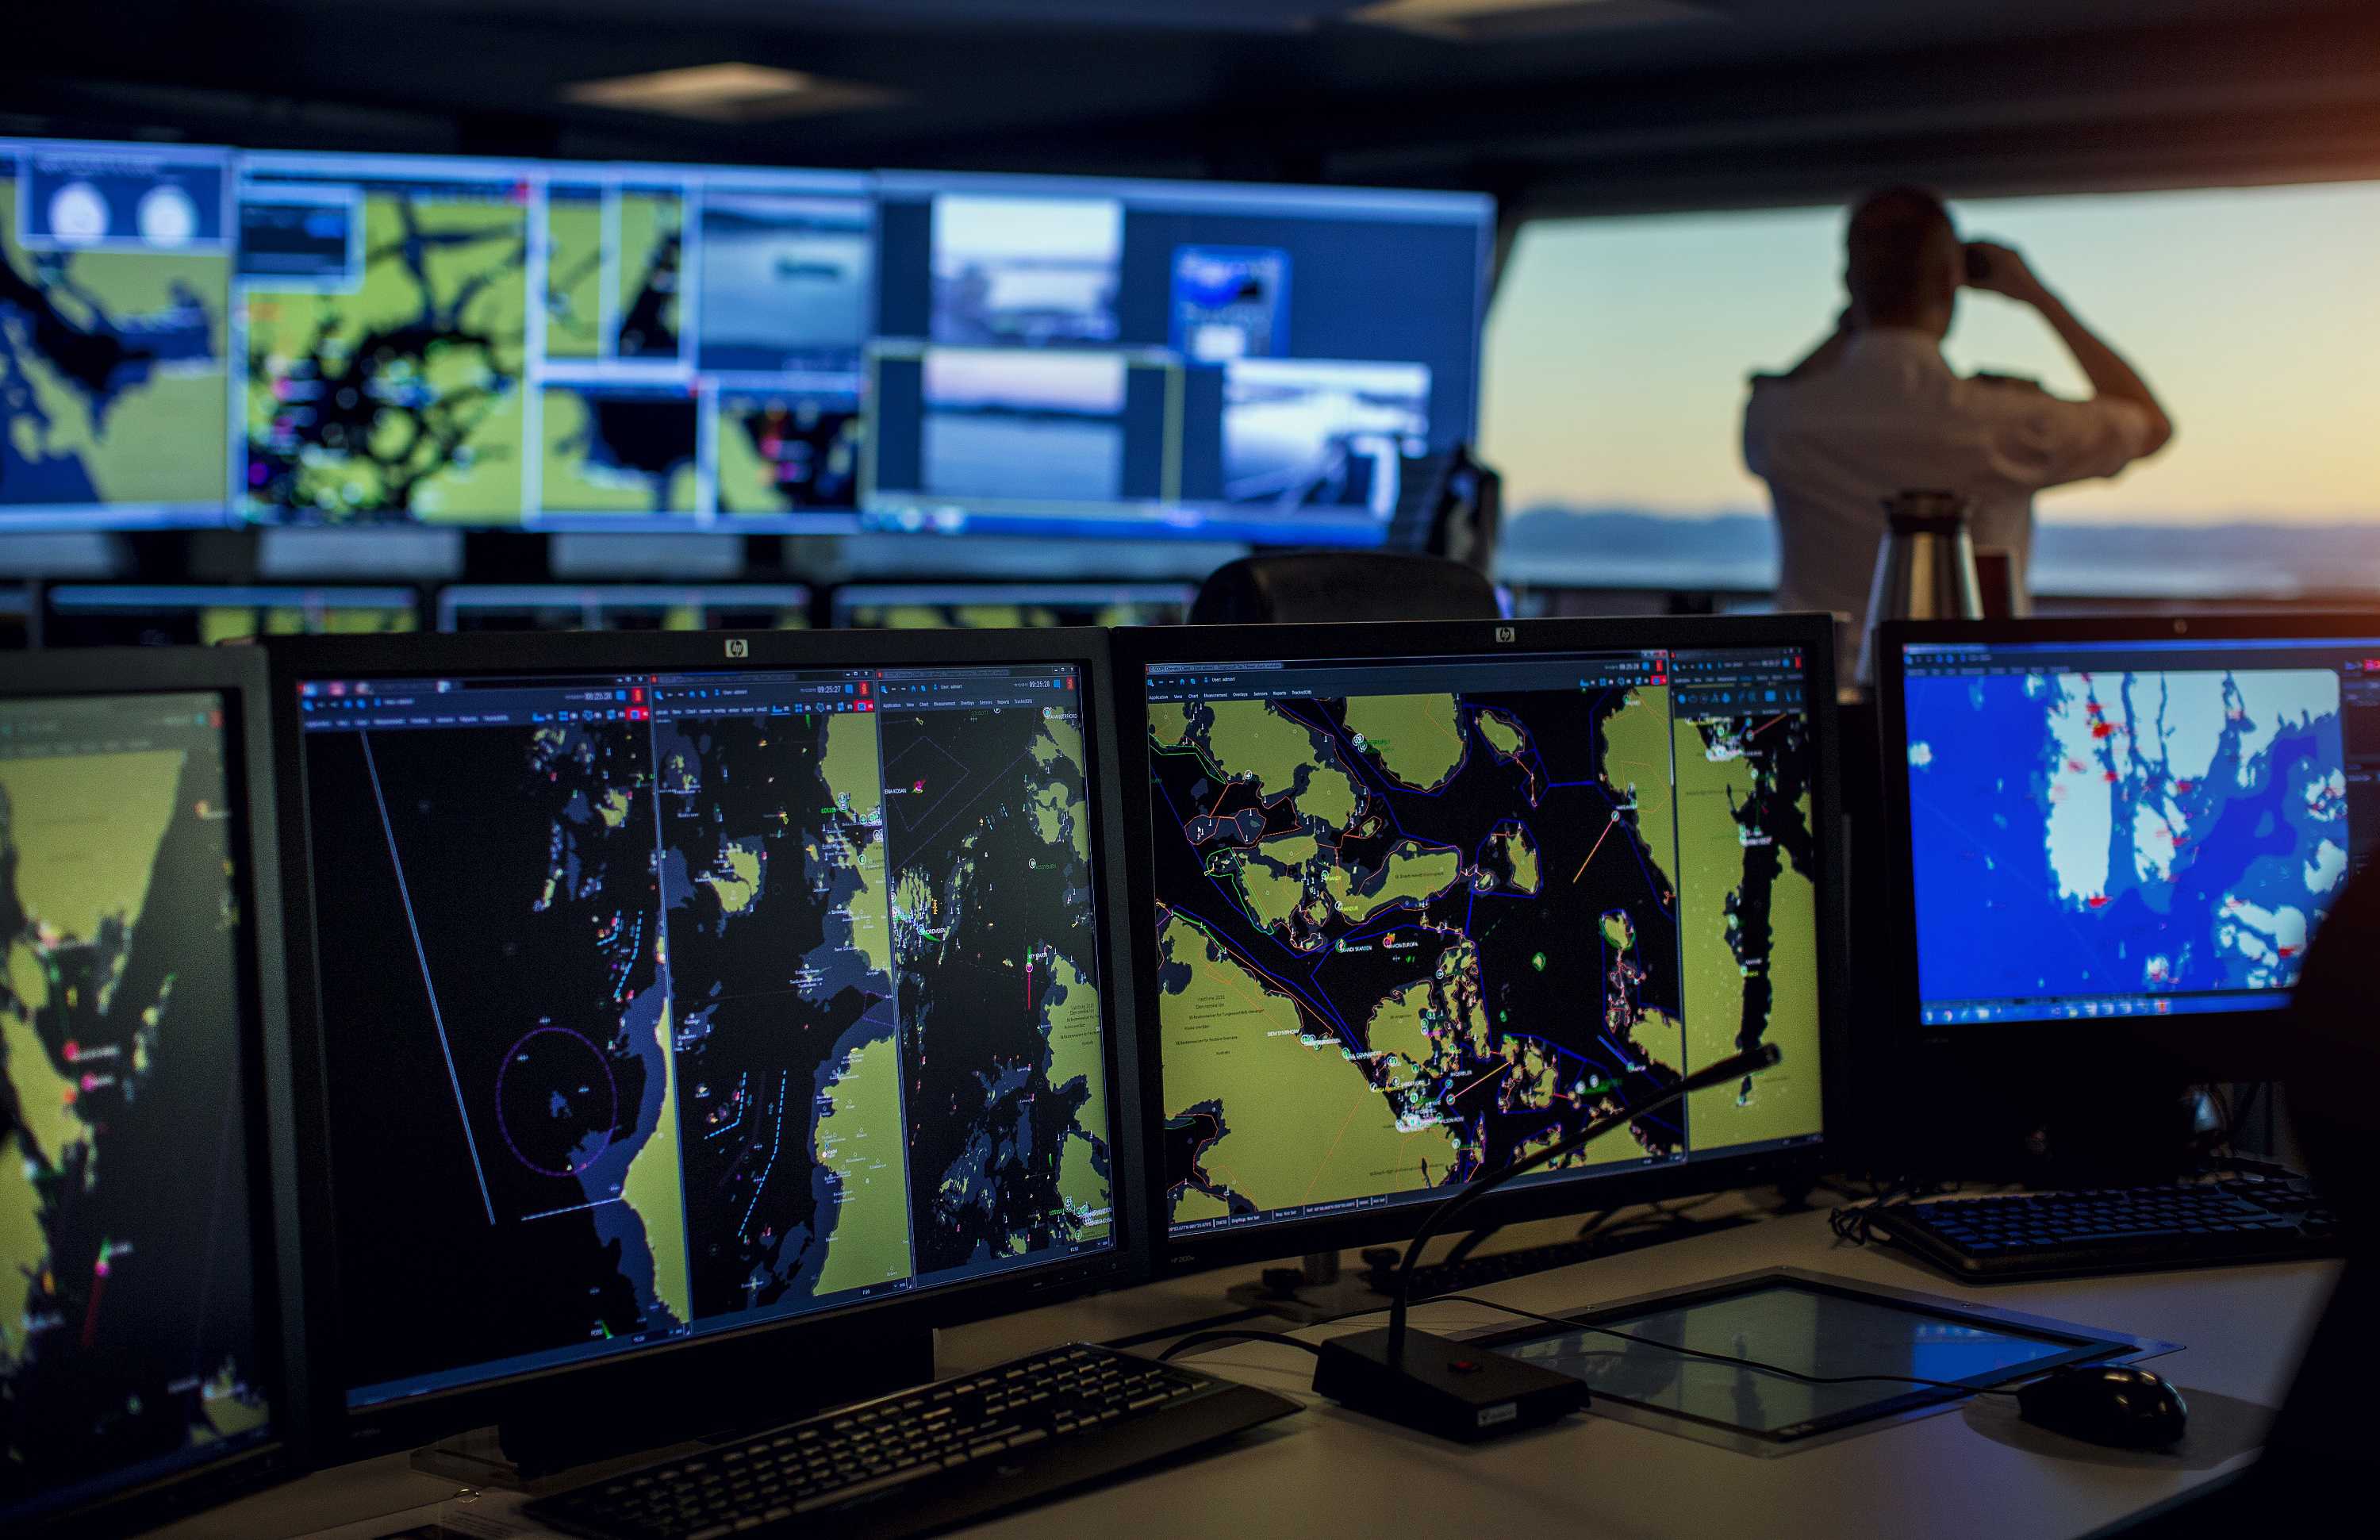 Control room of a ship - maritime surveillance